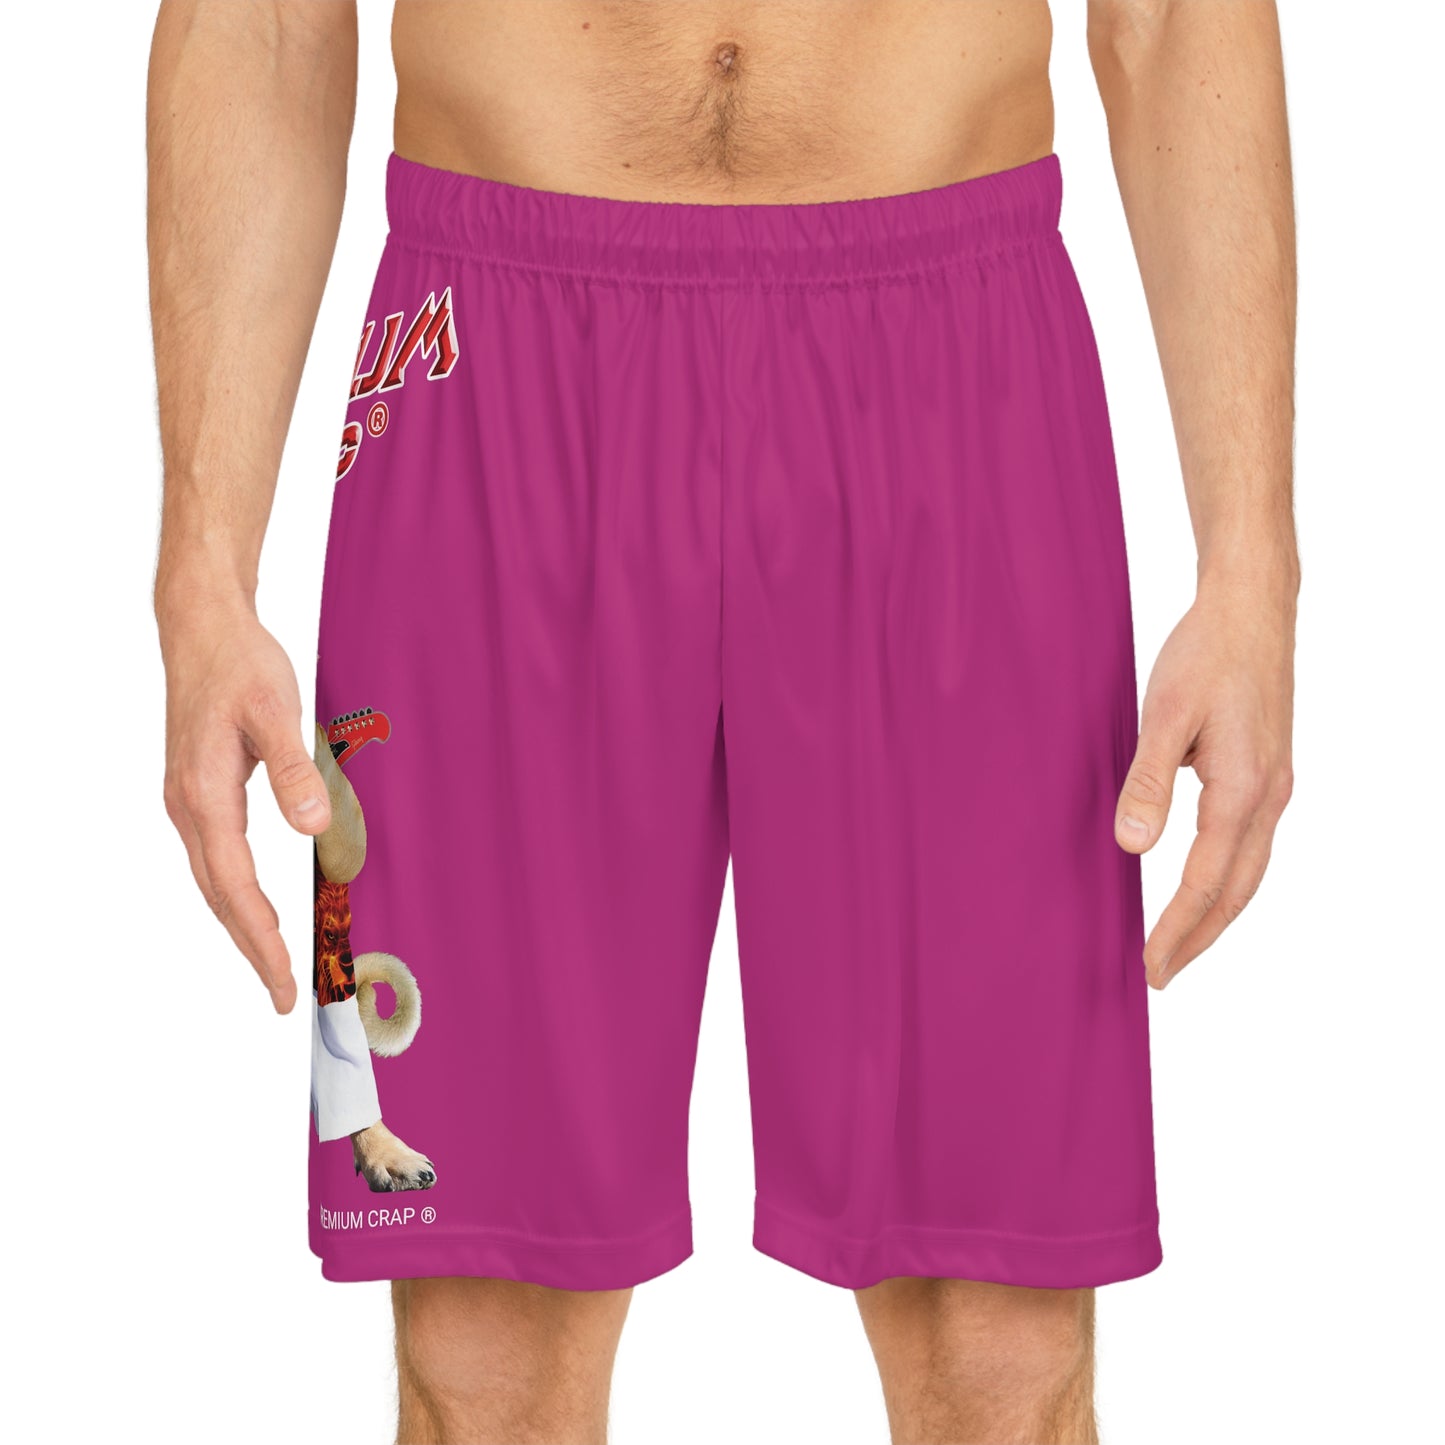 Premium Crap Basketball Shorts - Pink